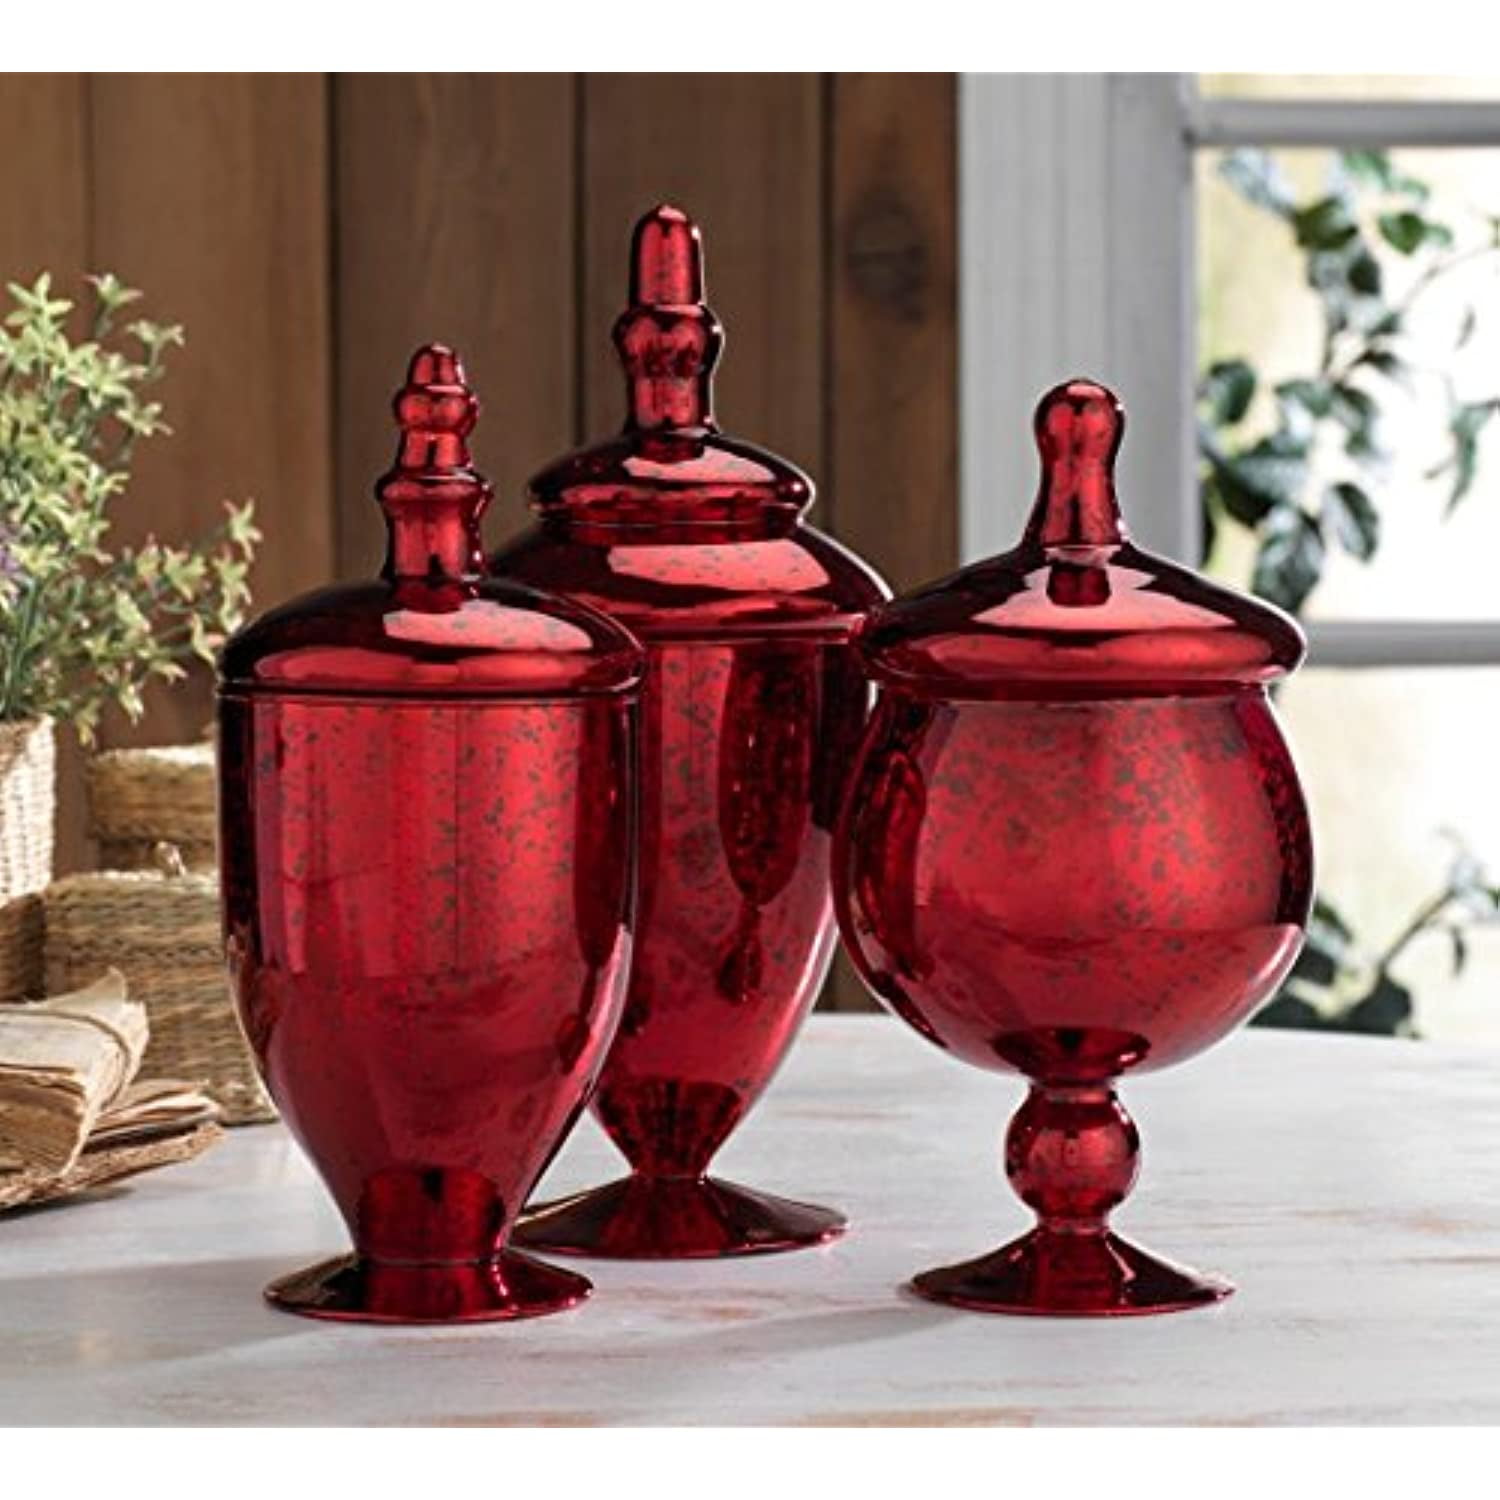 3 Piece Apothecary Jar Set Red Barrel Studio